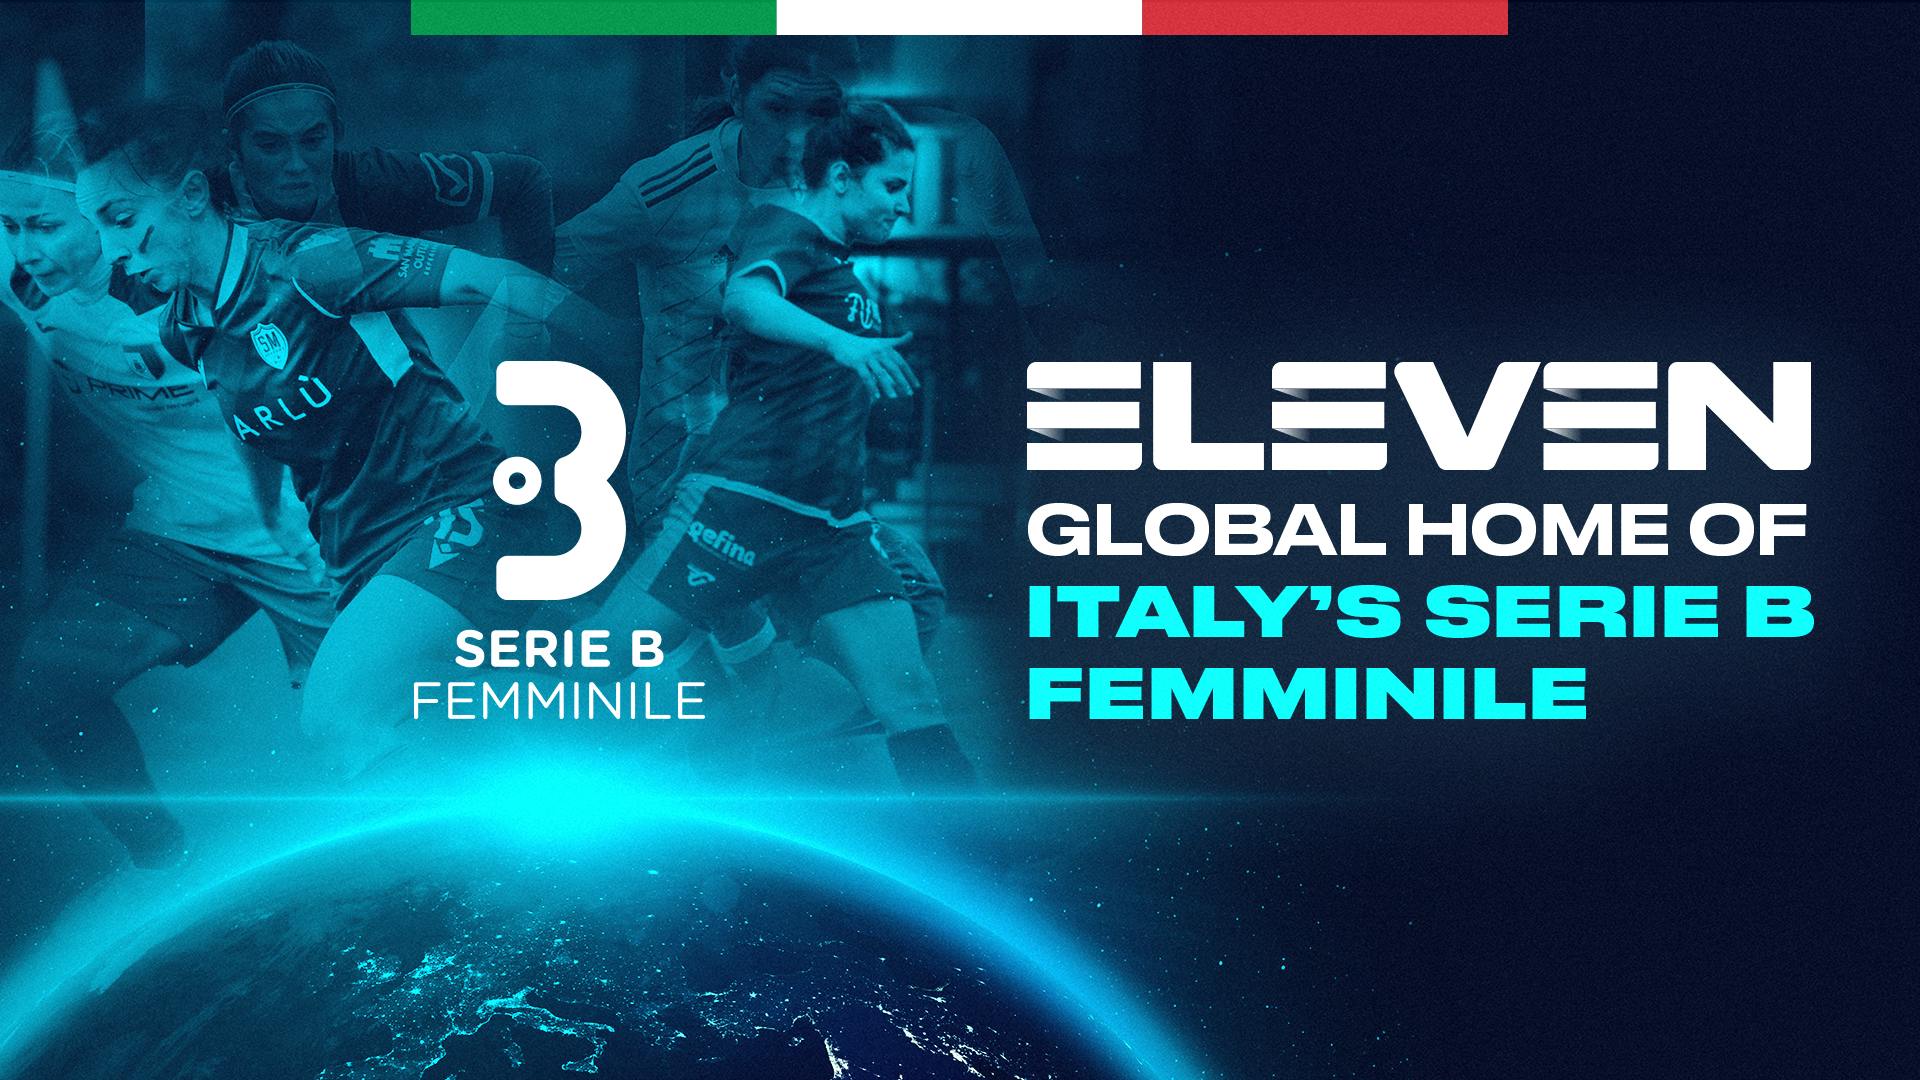 Eleven lands women's Serie B rights, LIVENow to show Big Bash League